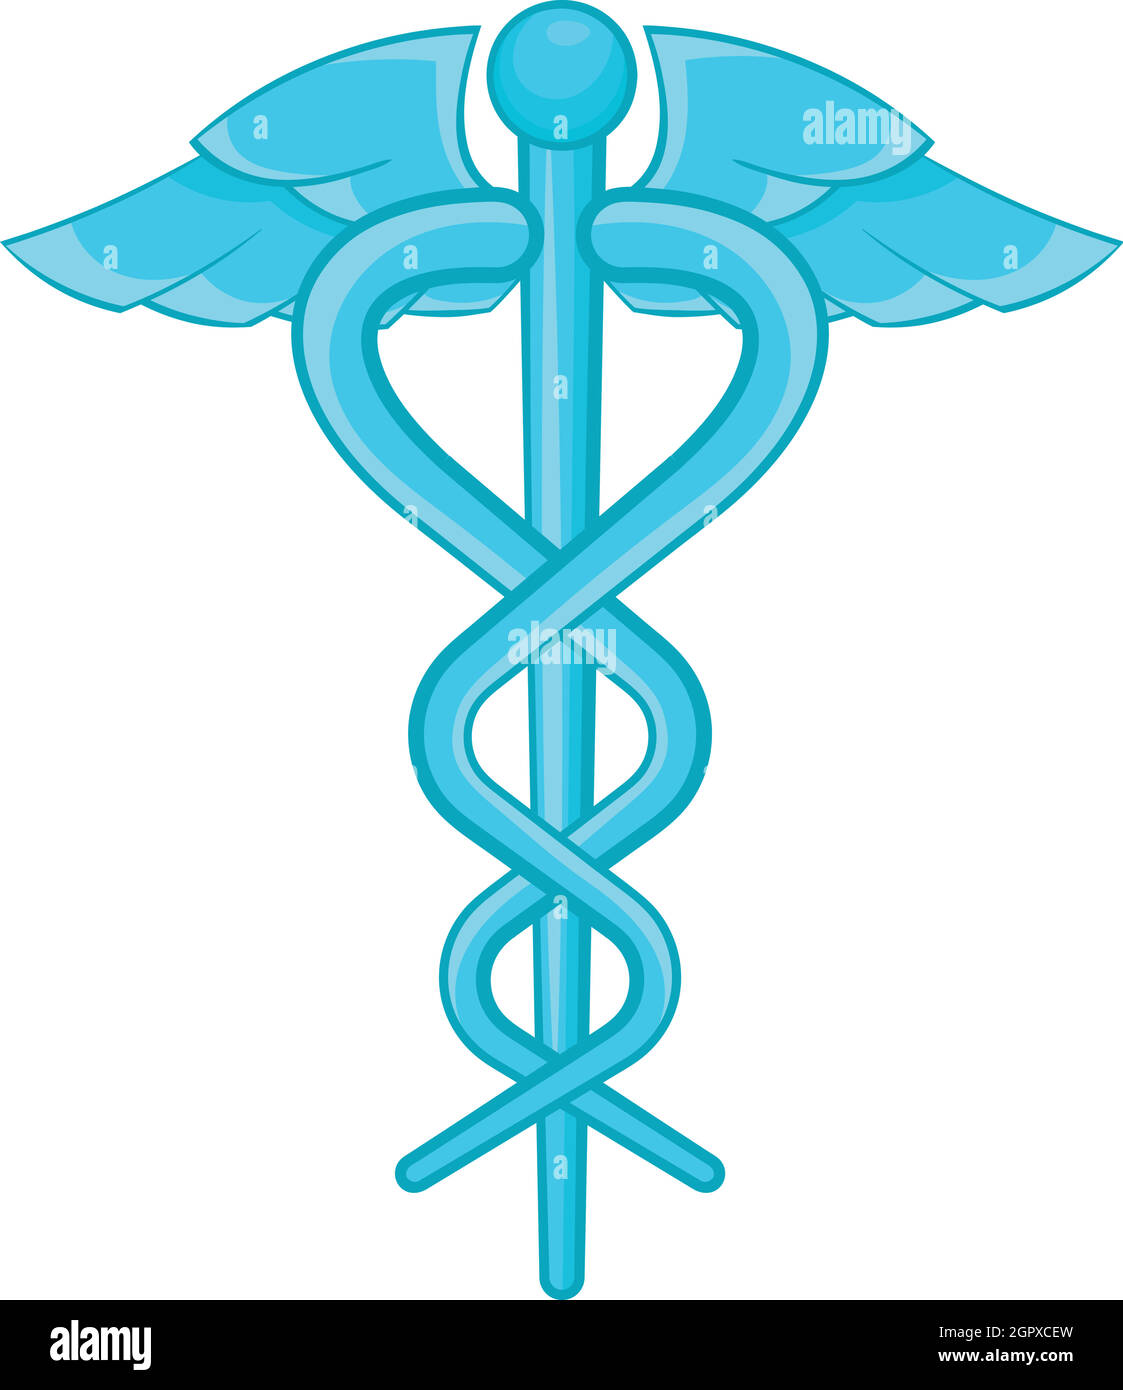 Caduceus medical symbol icon, cartoon style Stock Vector